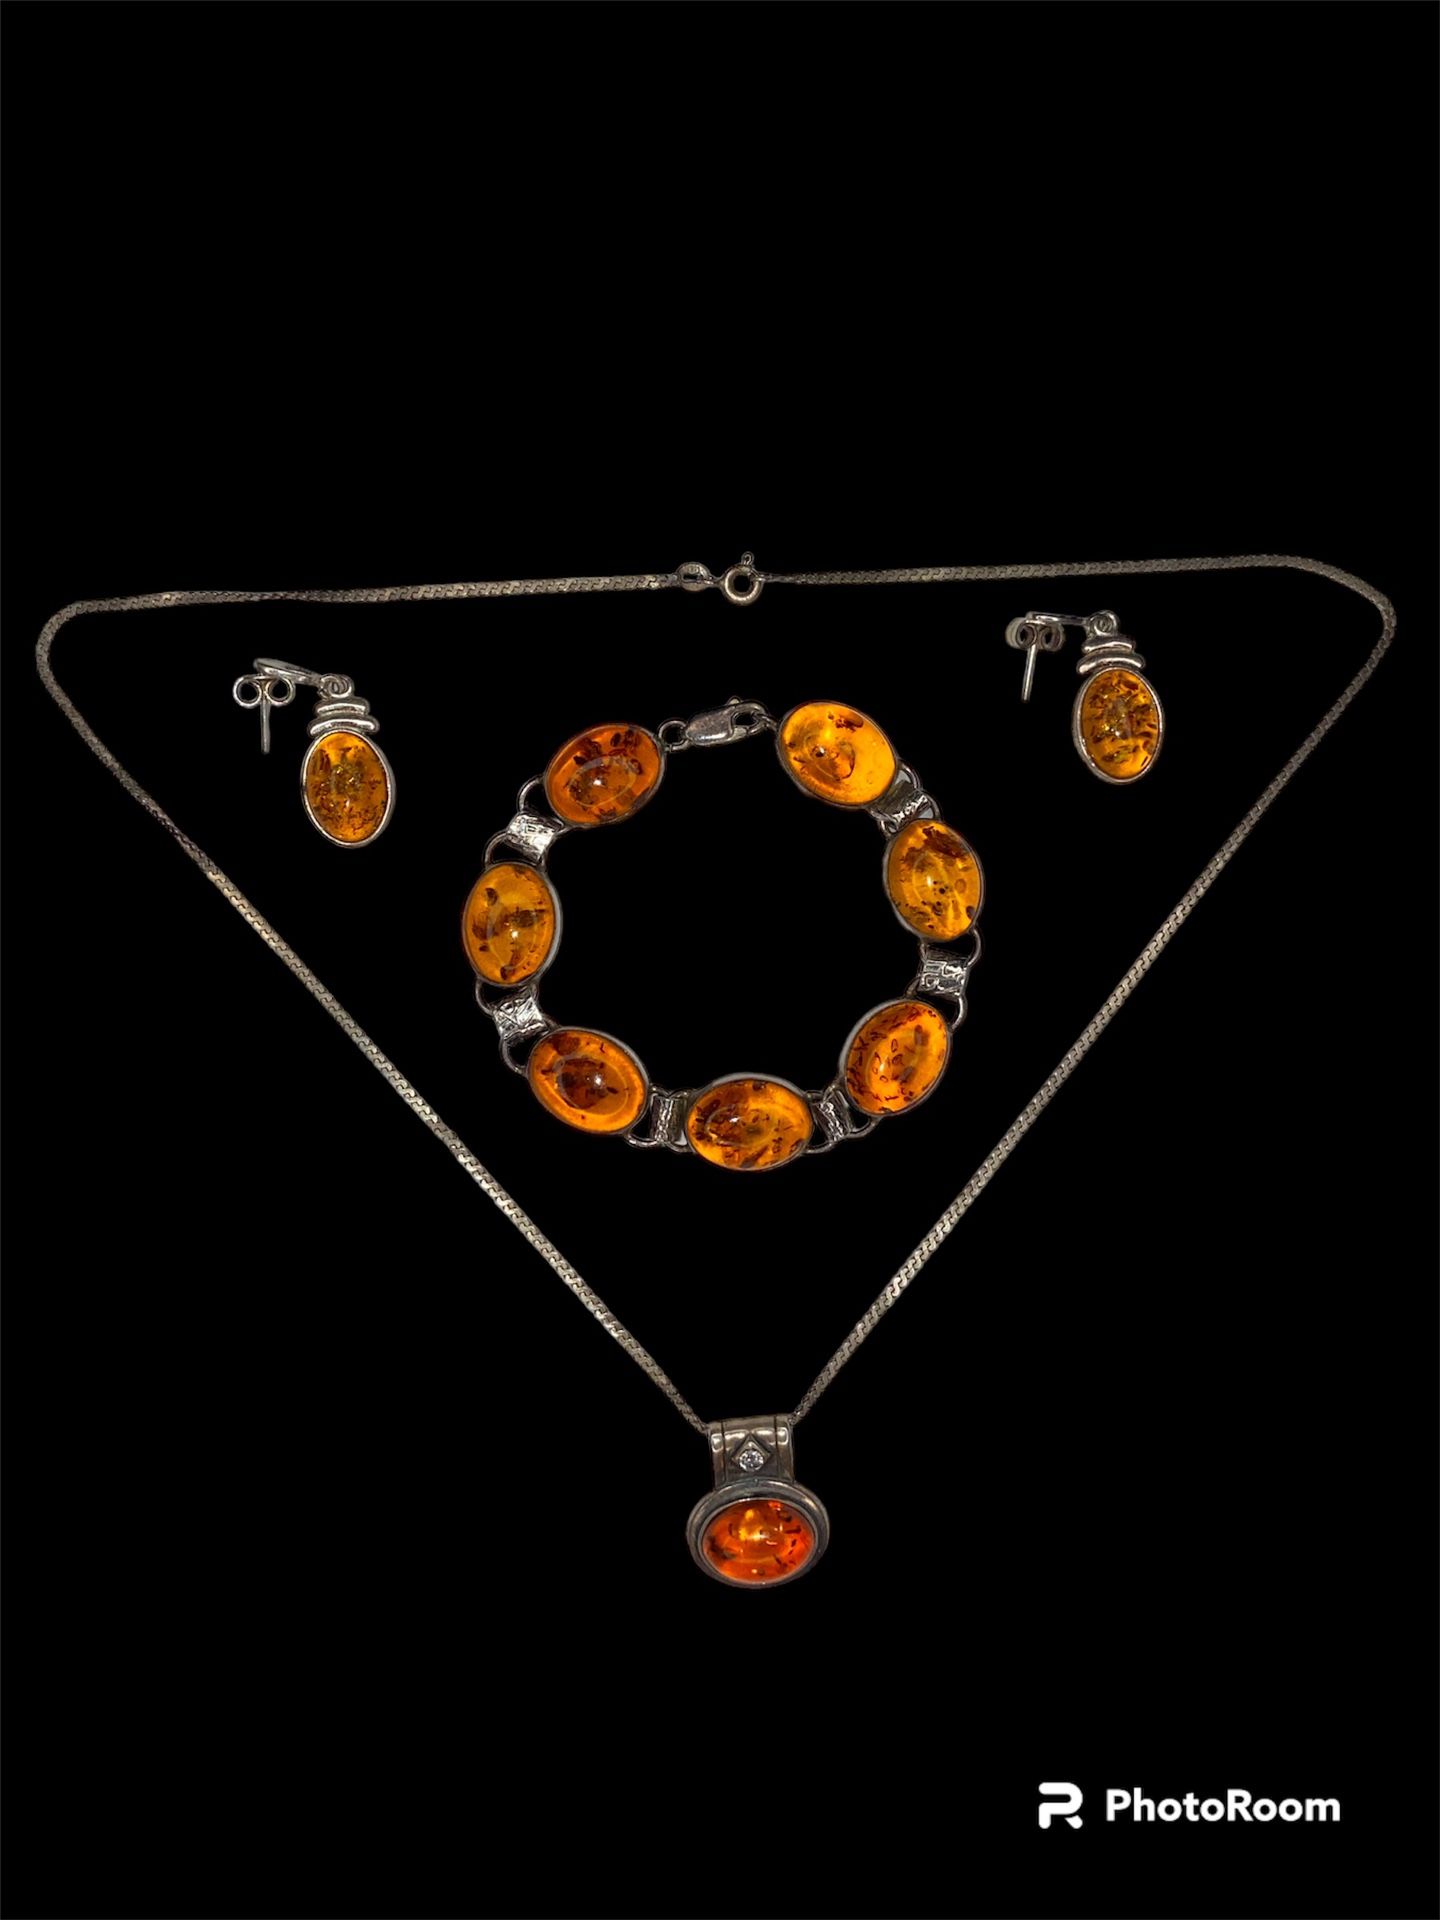 Vintage Amber Necklace Bracelet And Earrings Set Sterling Silver